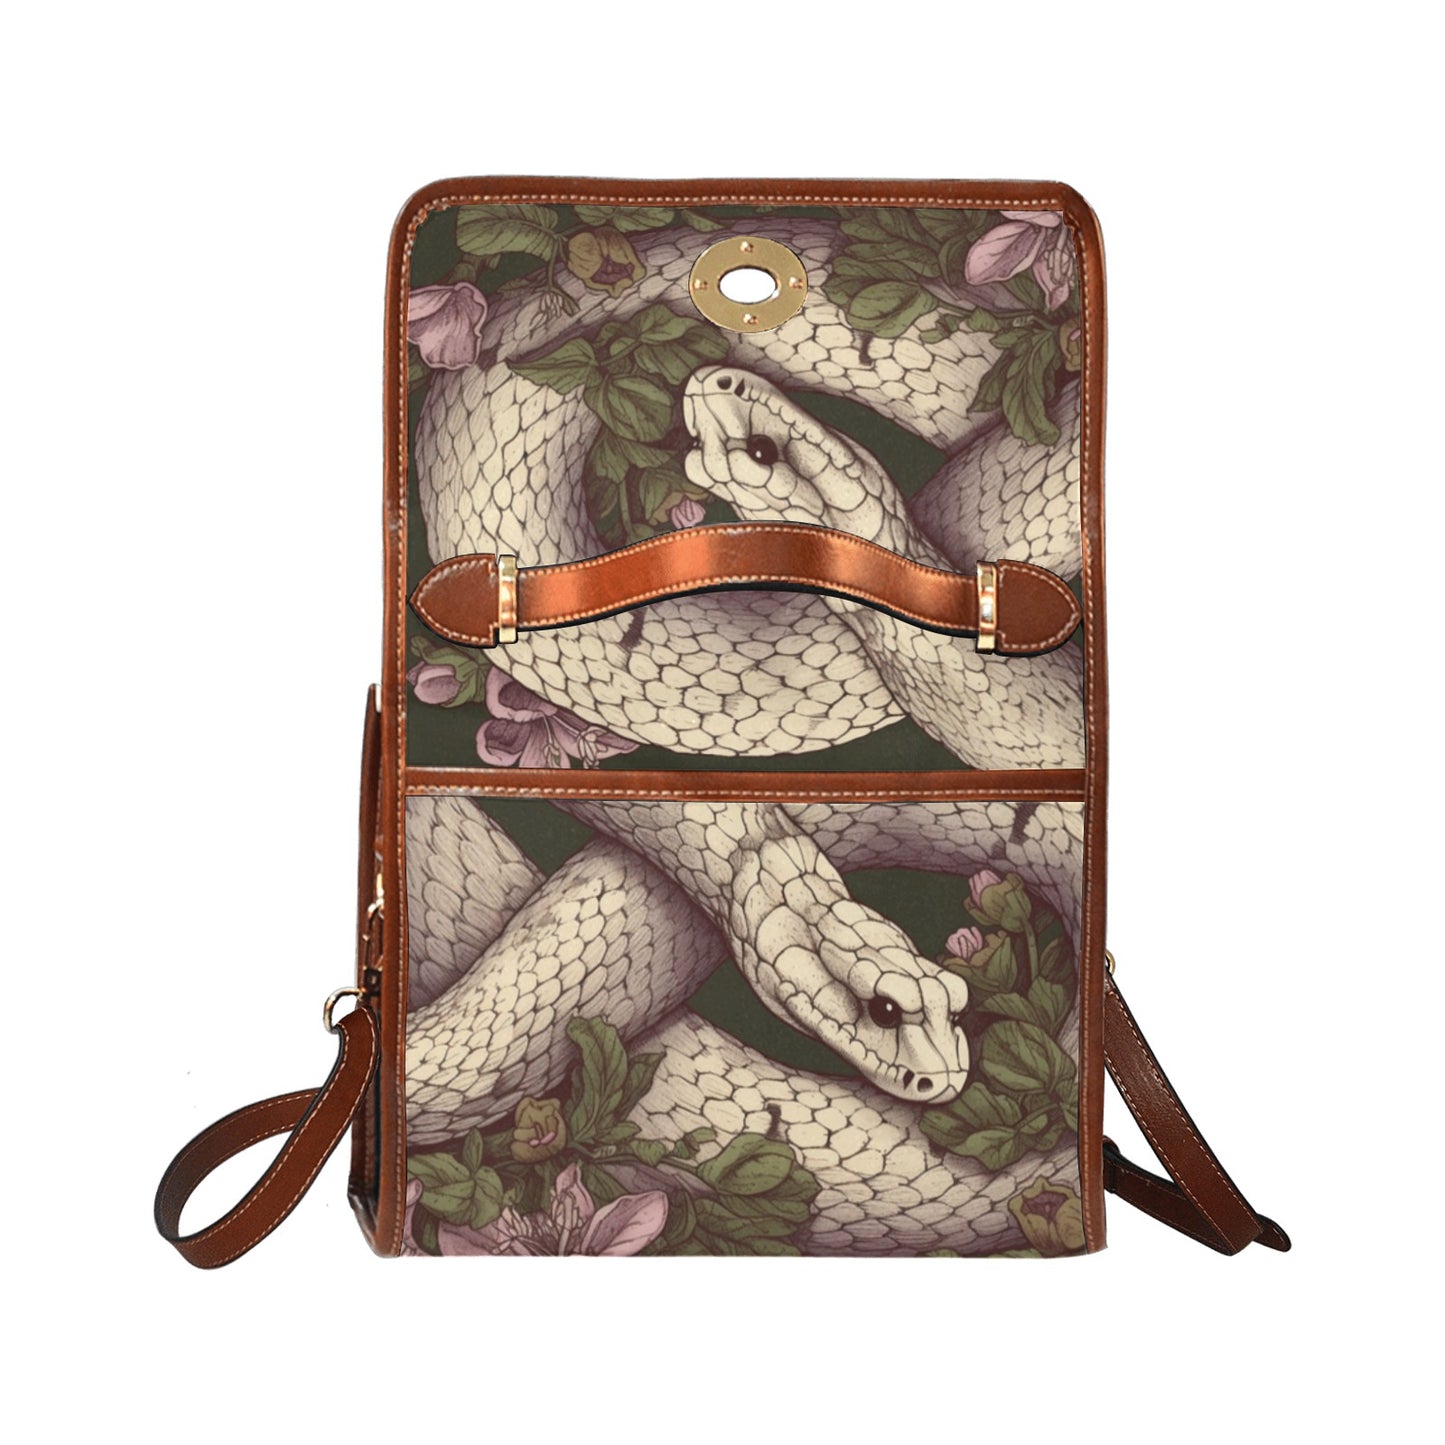 Serpent the old canvas satchel bag